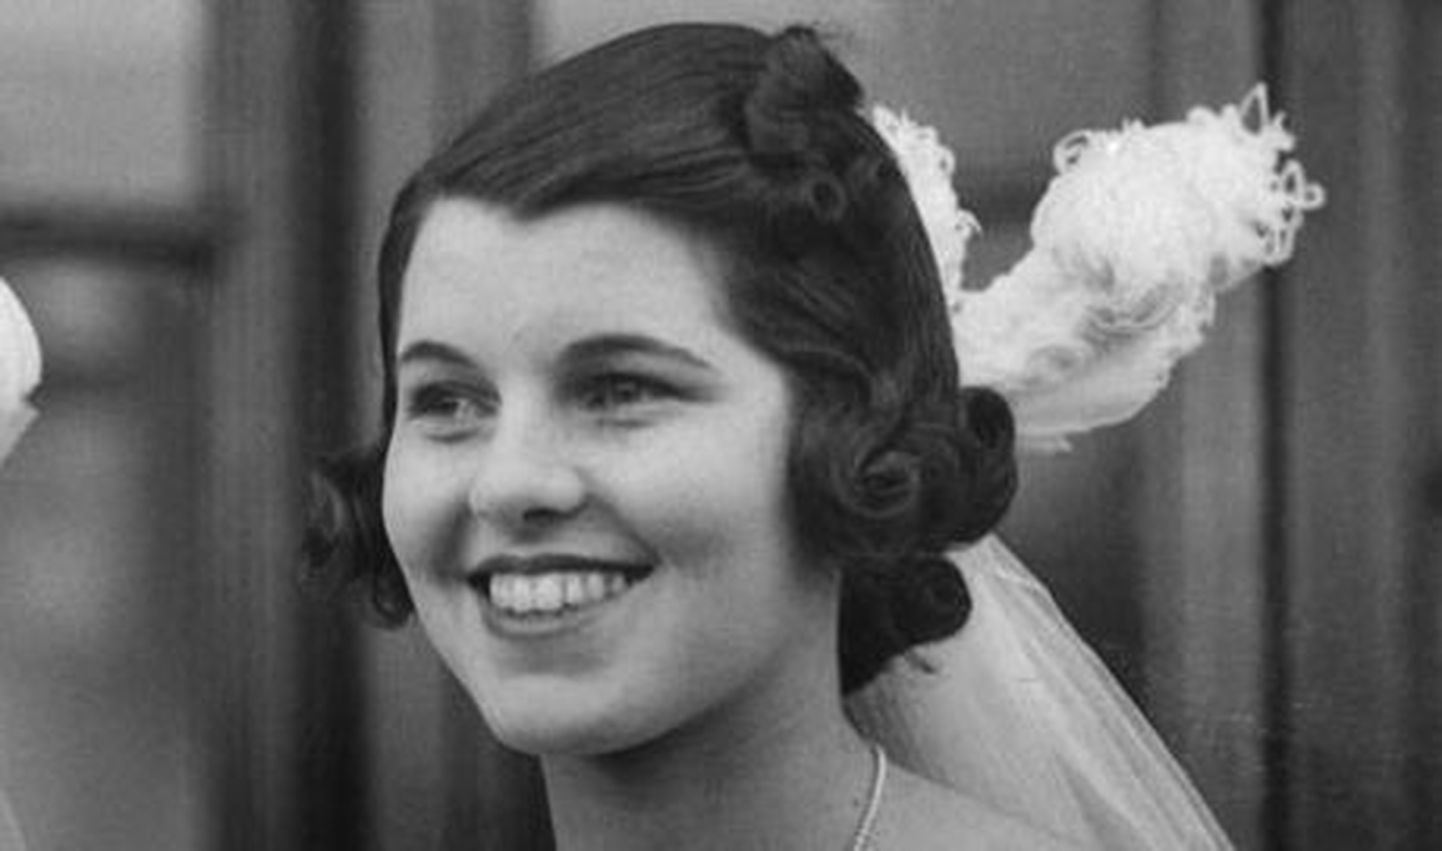 Rosemary Kennedy 19-aastasena